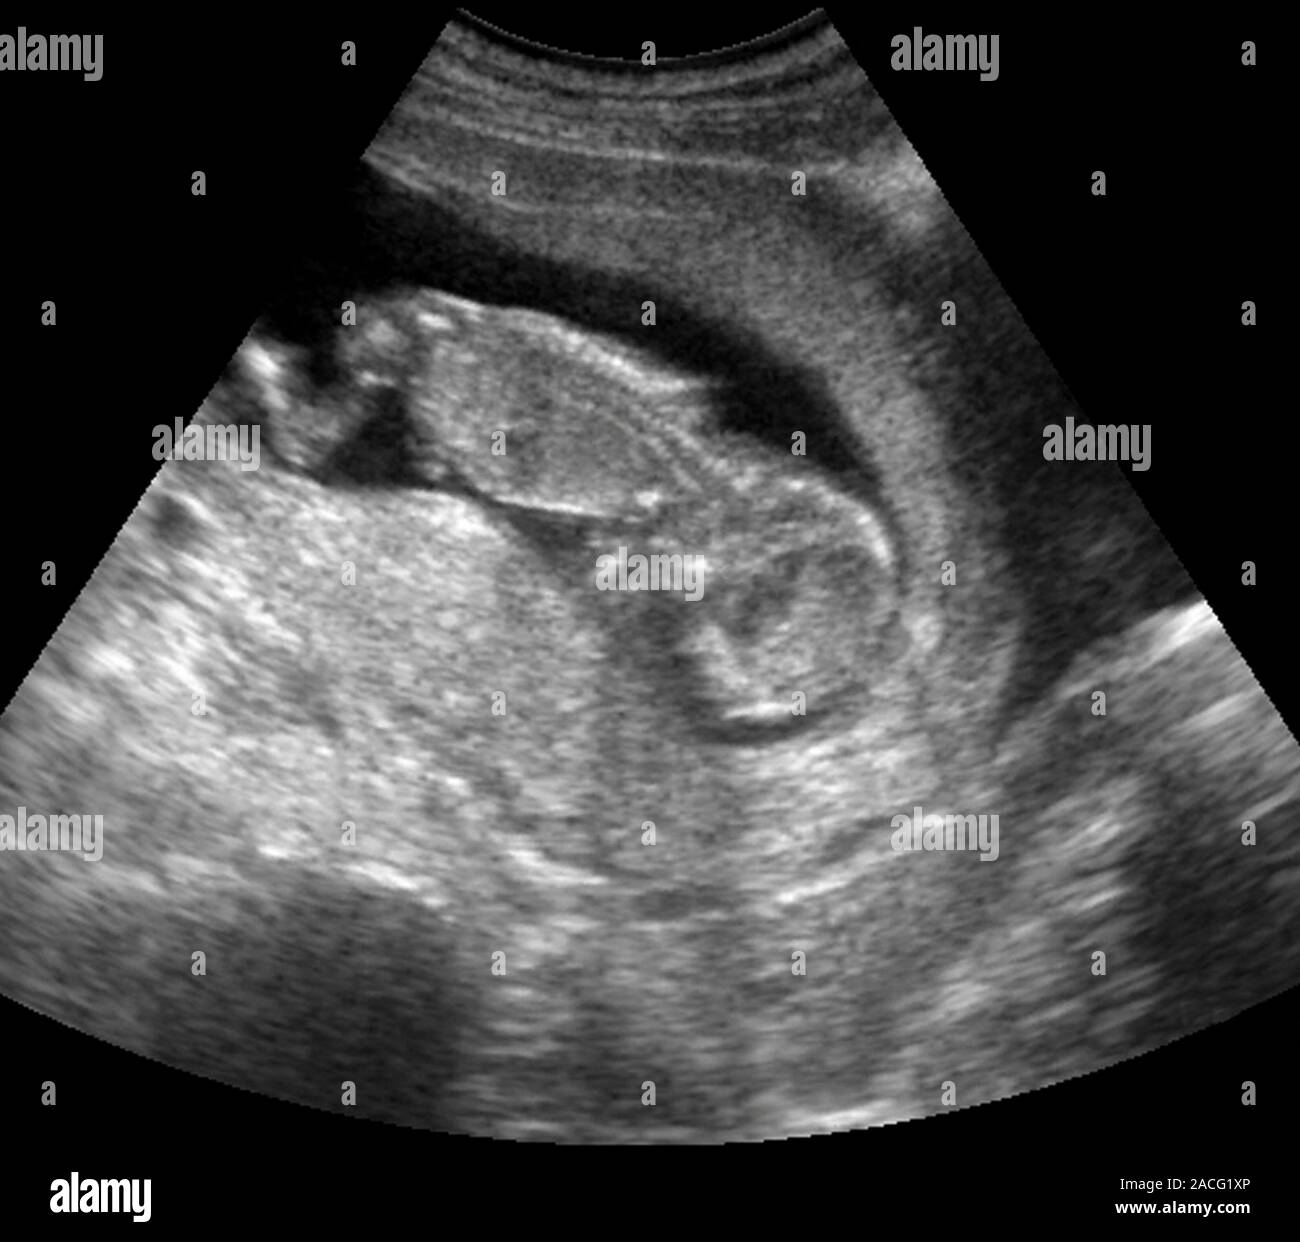 12 Недель беременности фото плода на УЗИ. Снимки УЗИ беременности 12 недель. УЗИ малыша на 12 неделе беременности фото. Малыш на 12 неделе